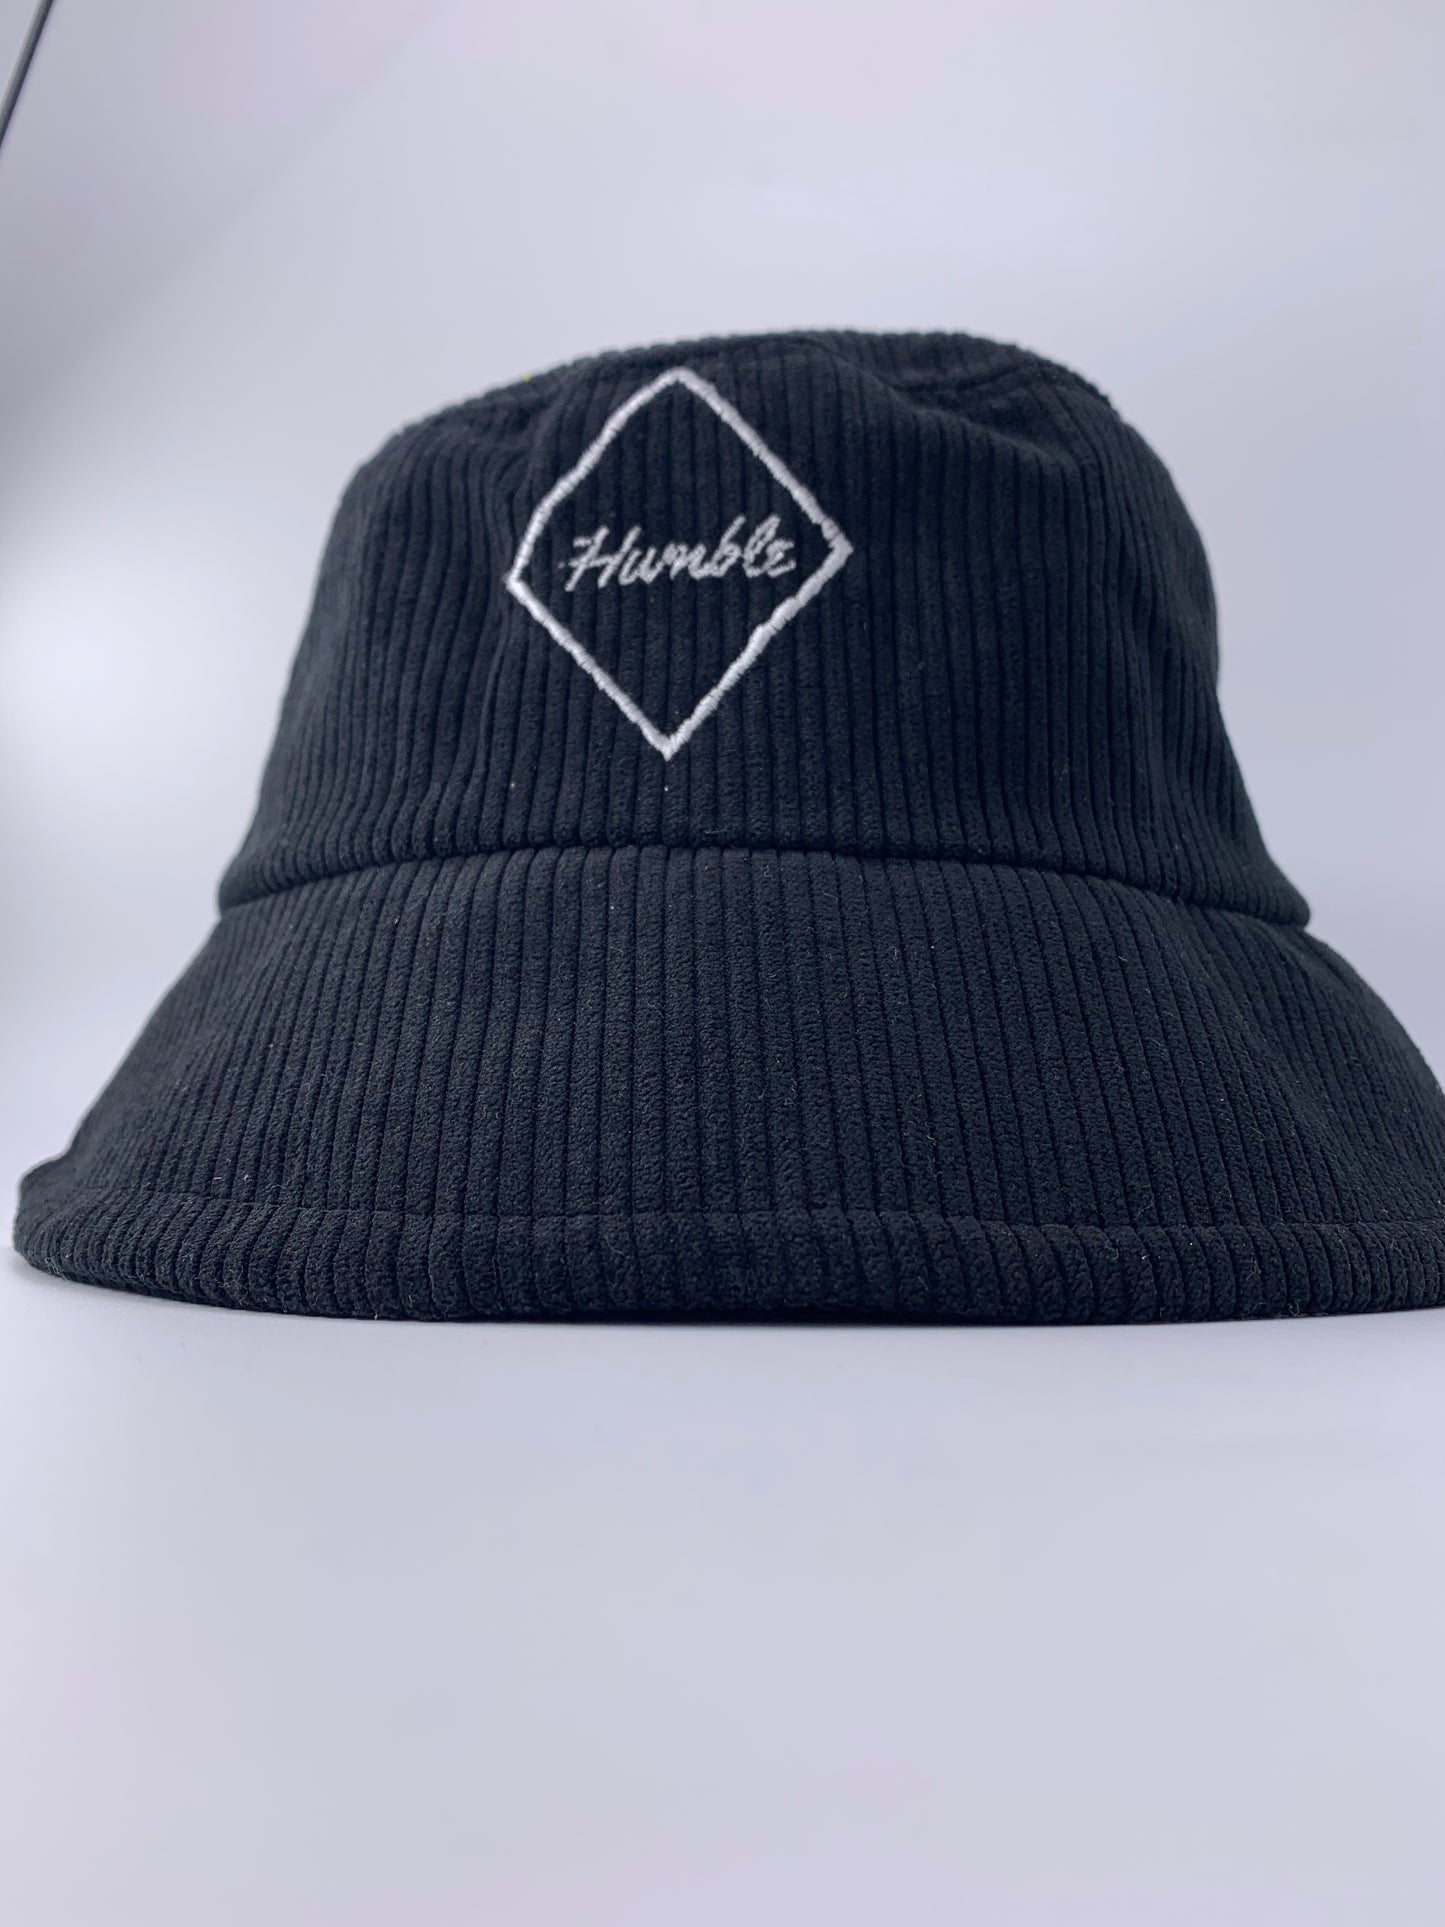 Black Corduroy Humble Hats